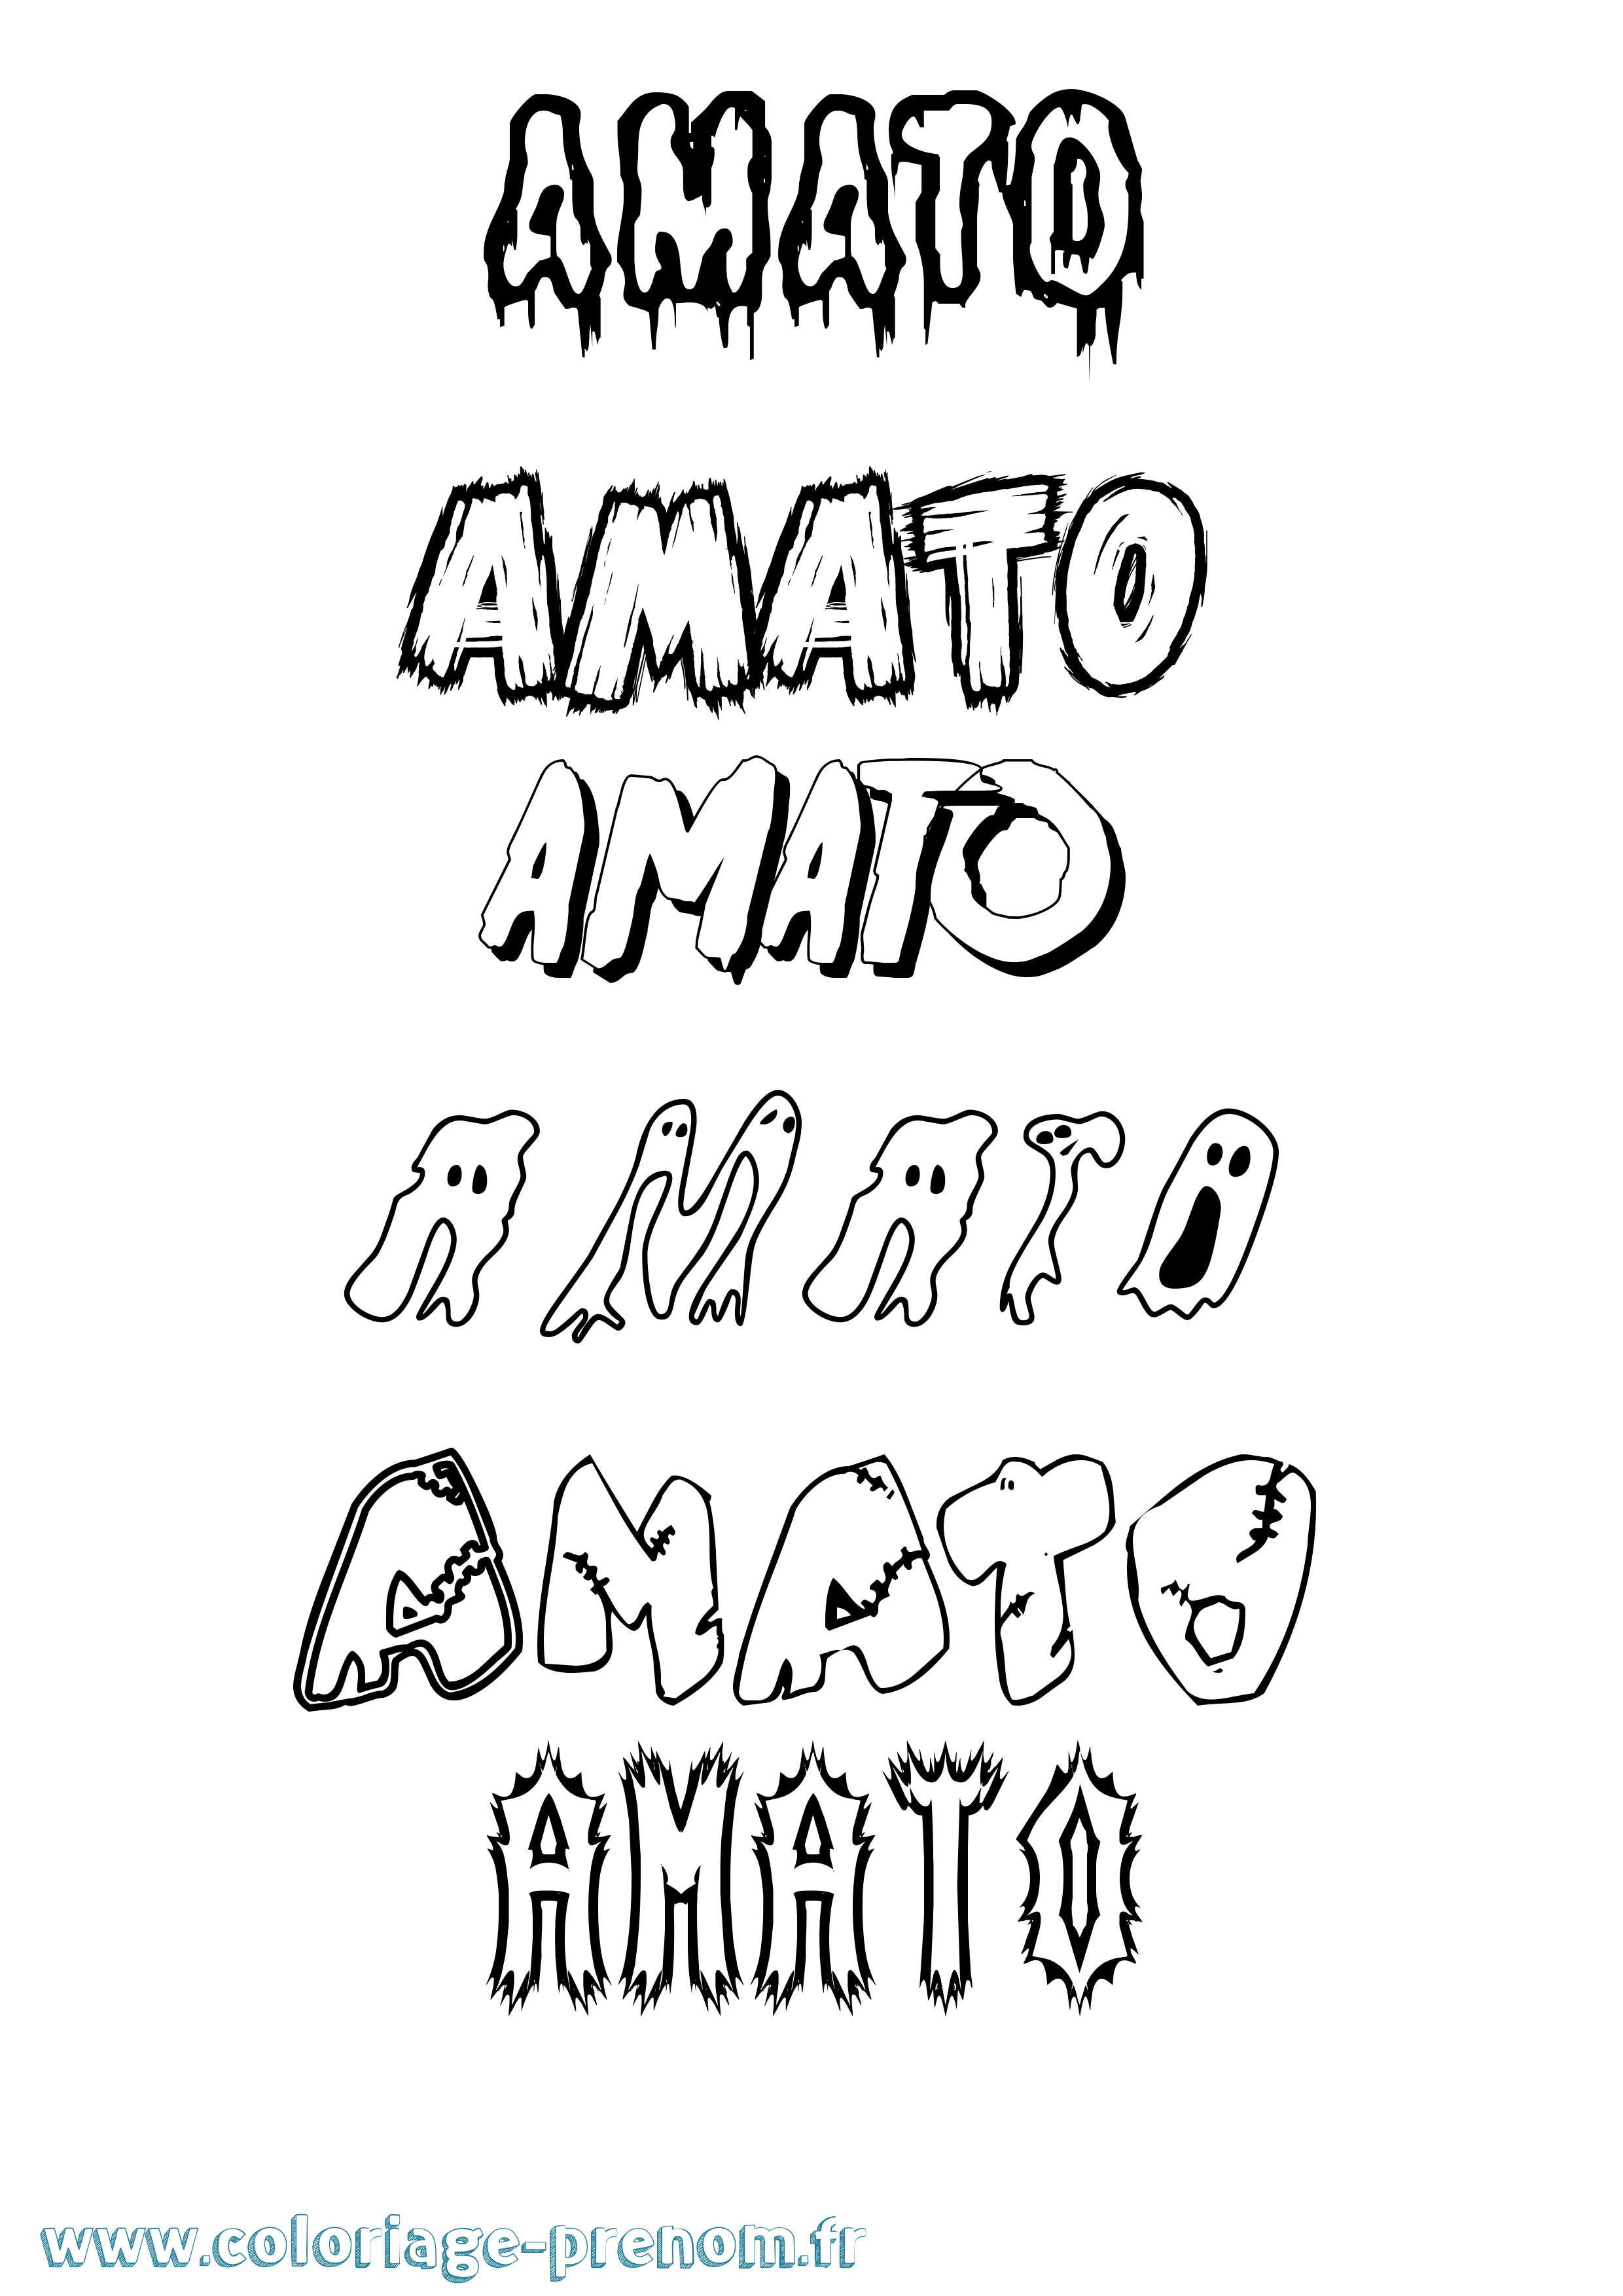 Coloriage prénom Amato Frisson